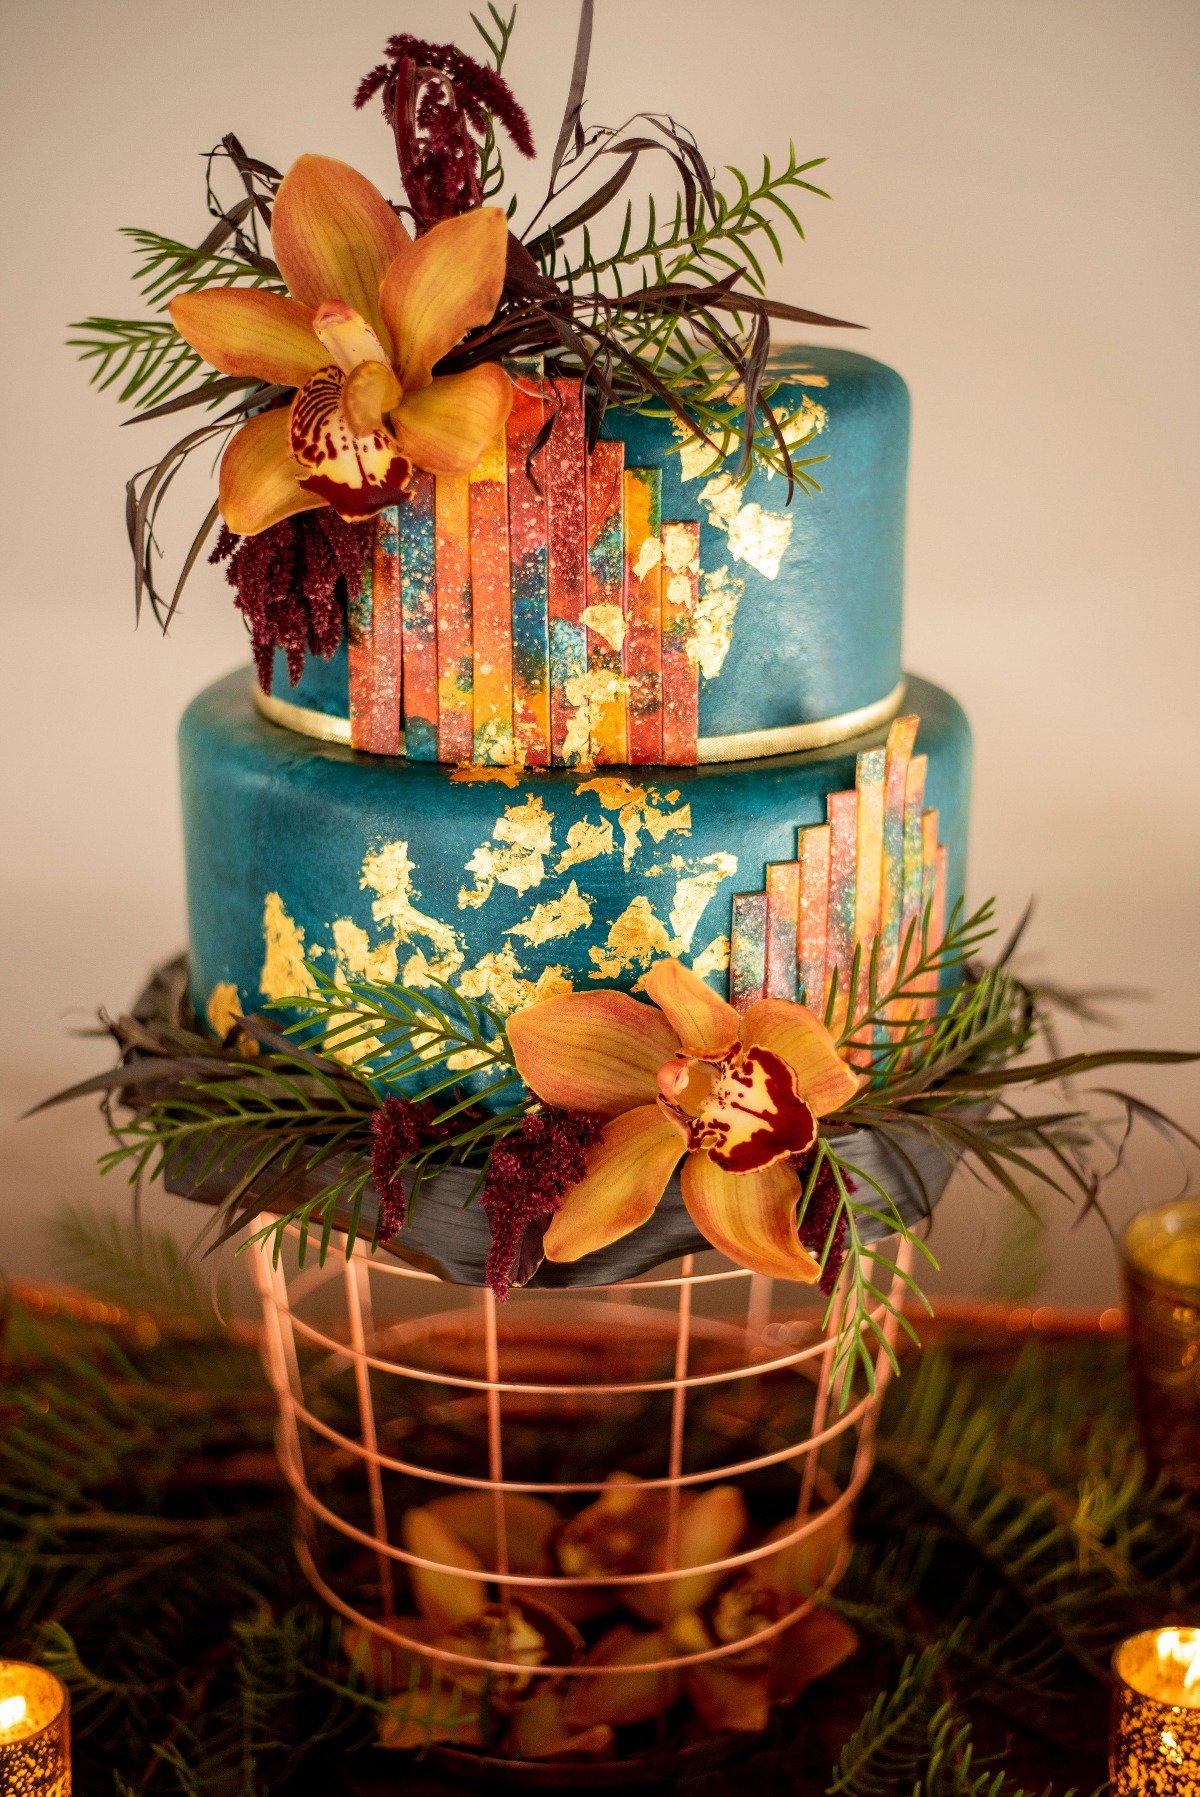 Teal and gold wedding cake by Carolina Sugar Fairy